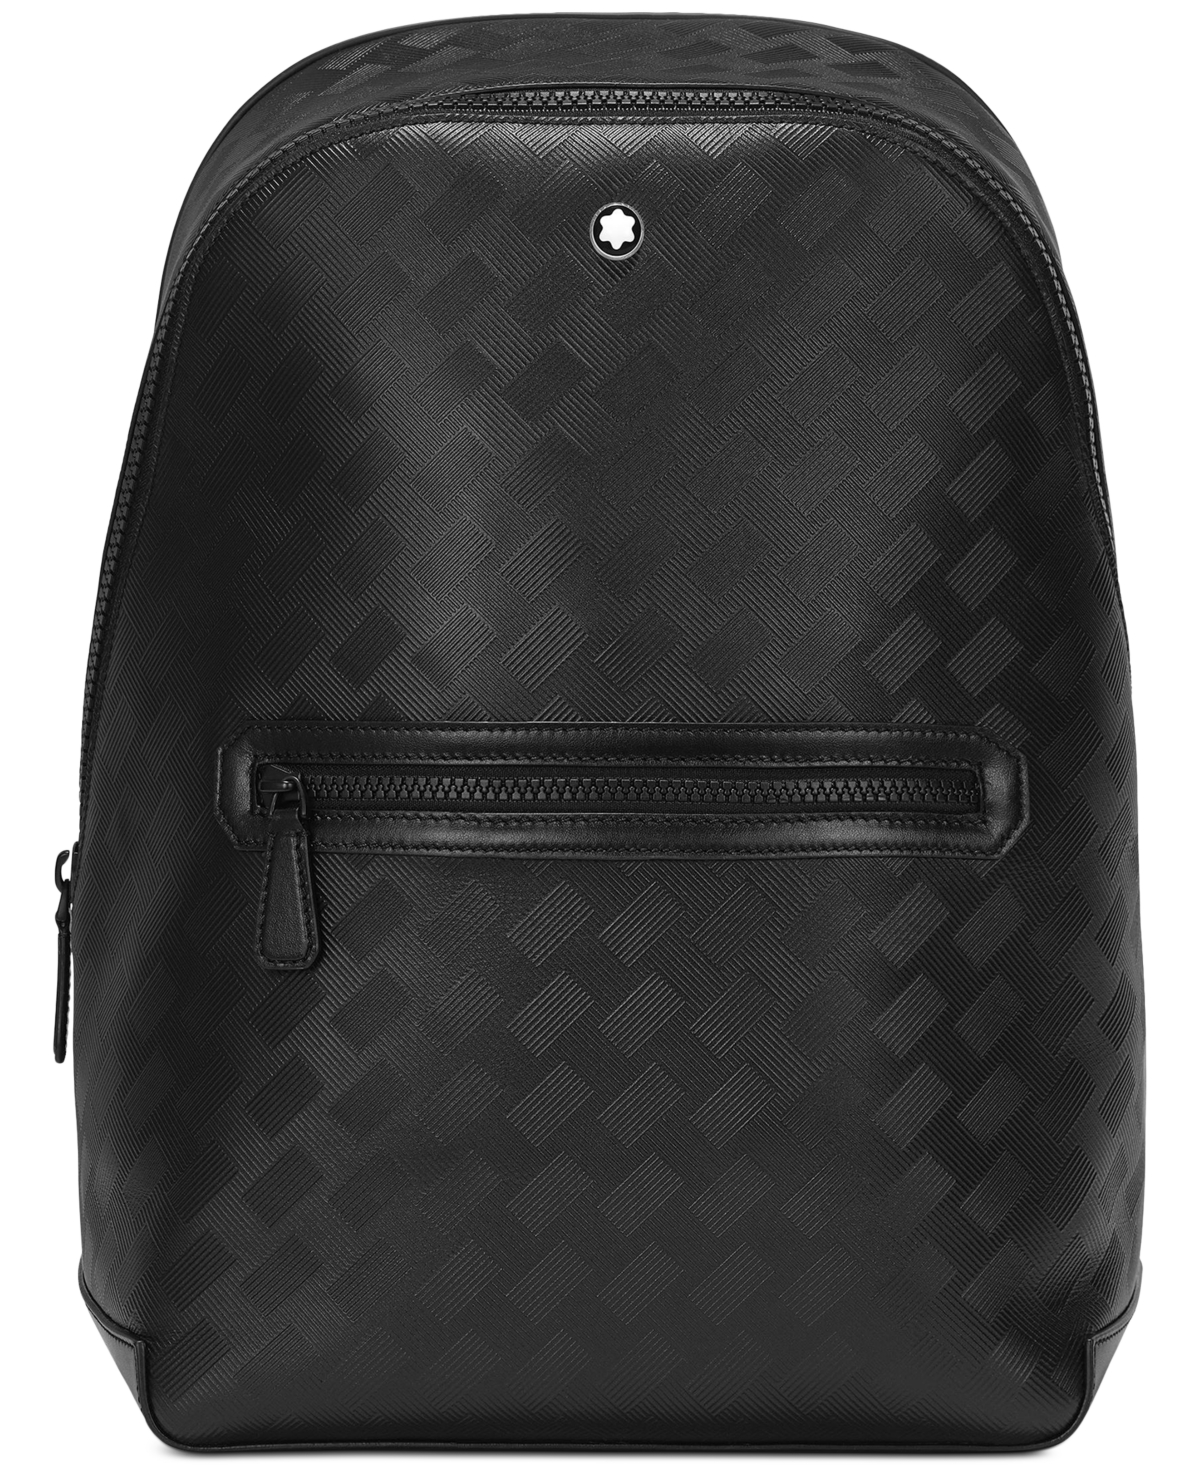 Extreme 3.0 Backpack - Black